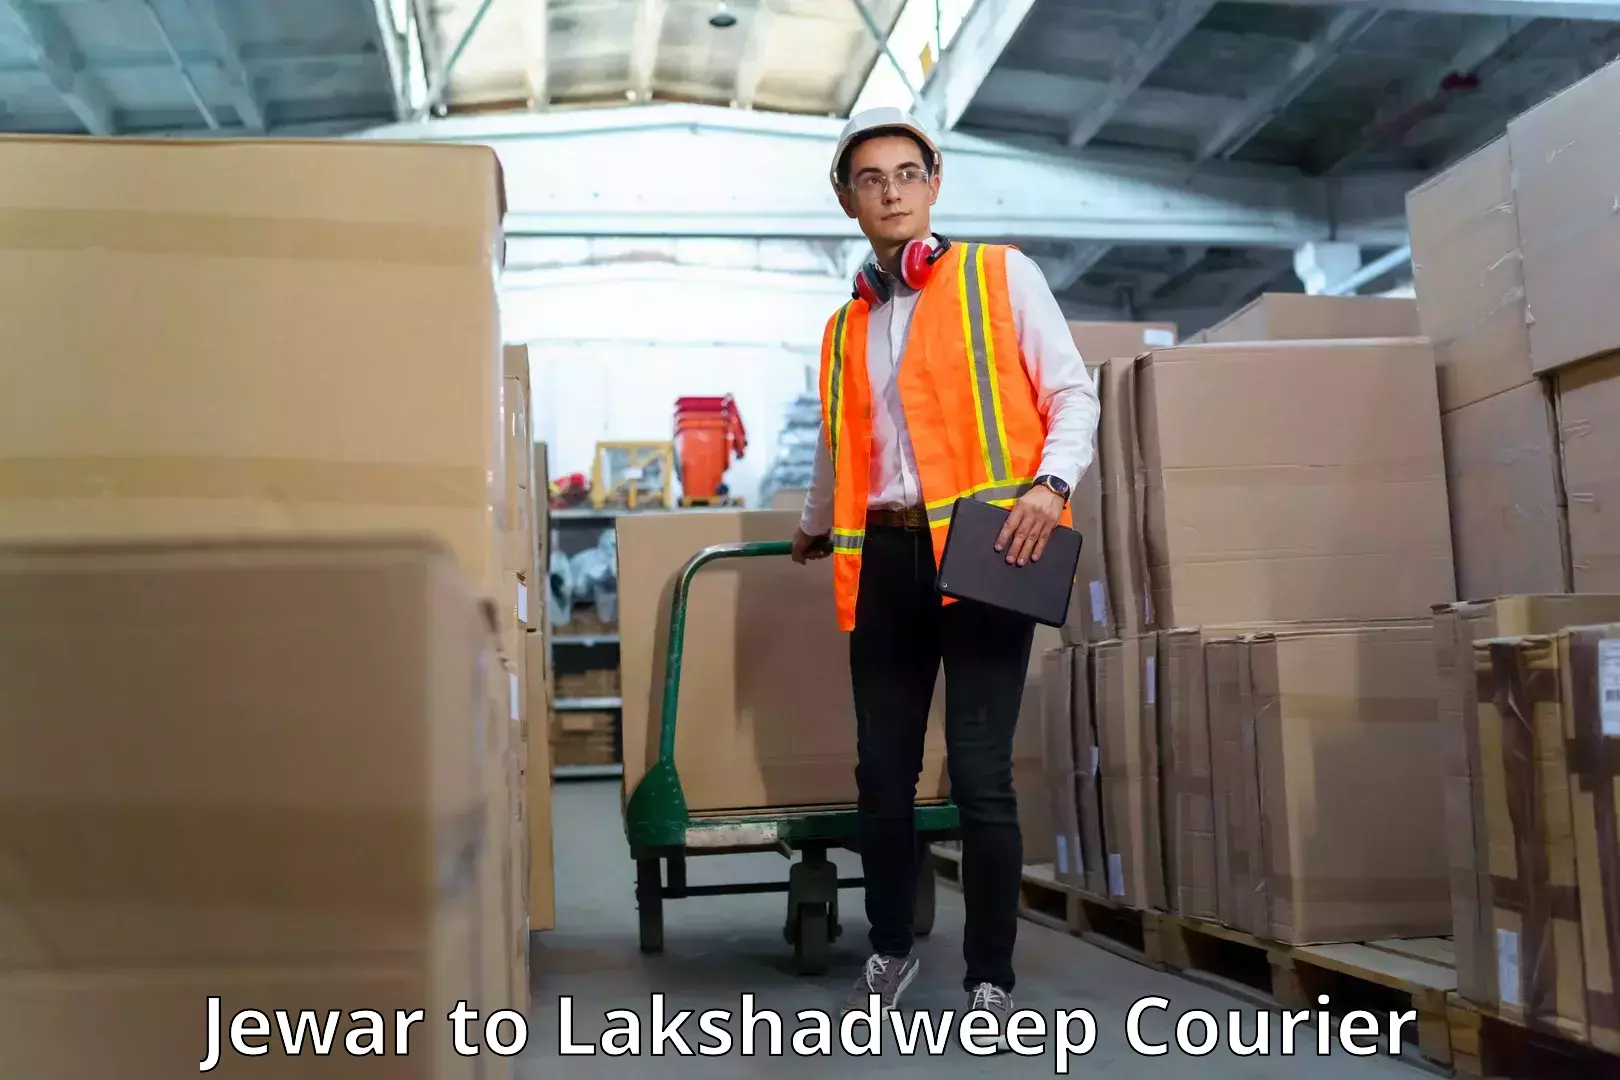 Courier membership in Jewar to Lakshadweep